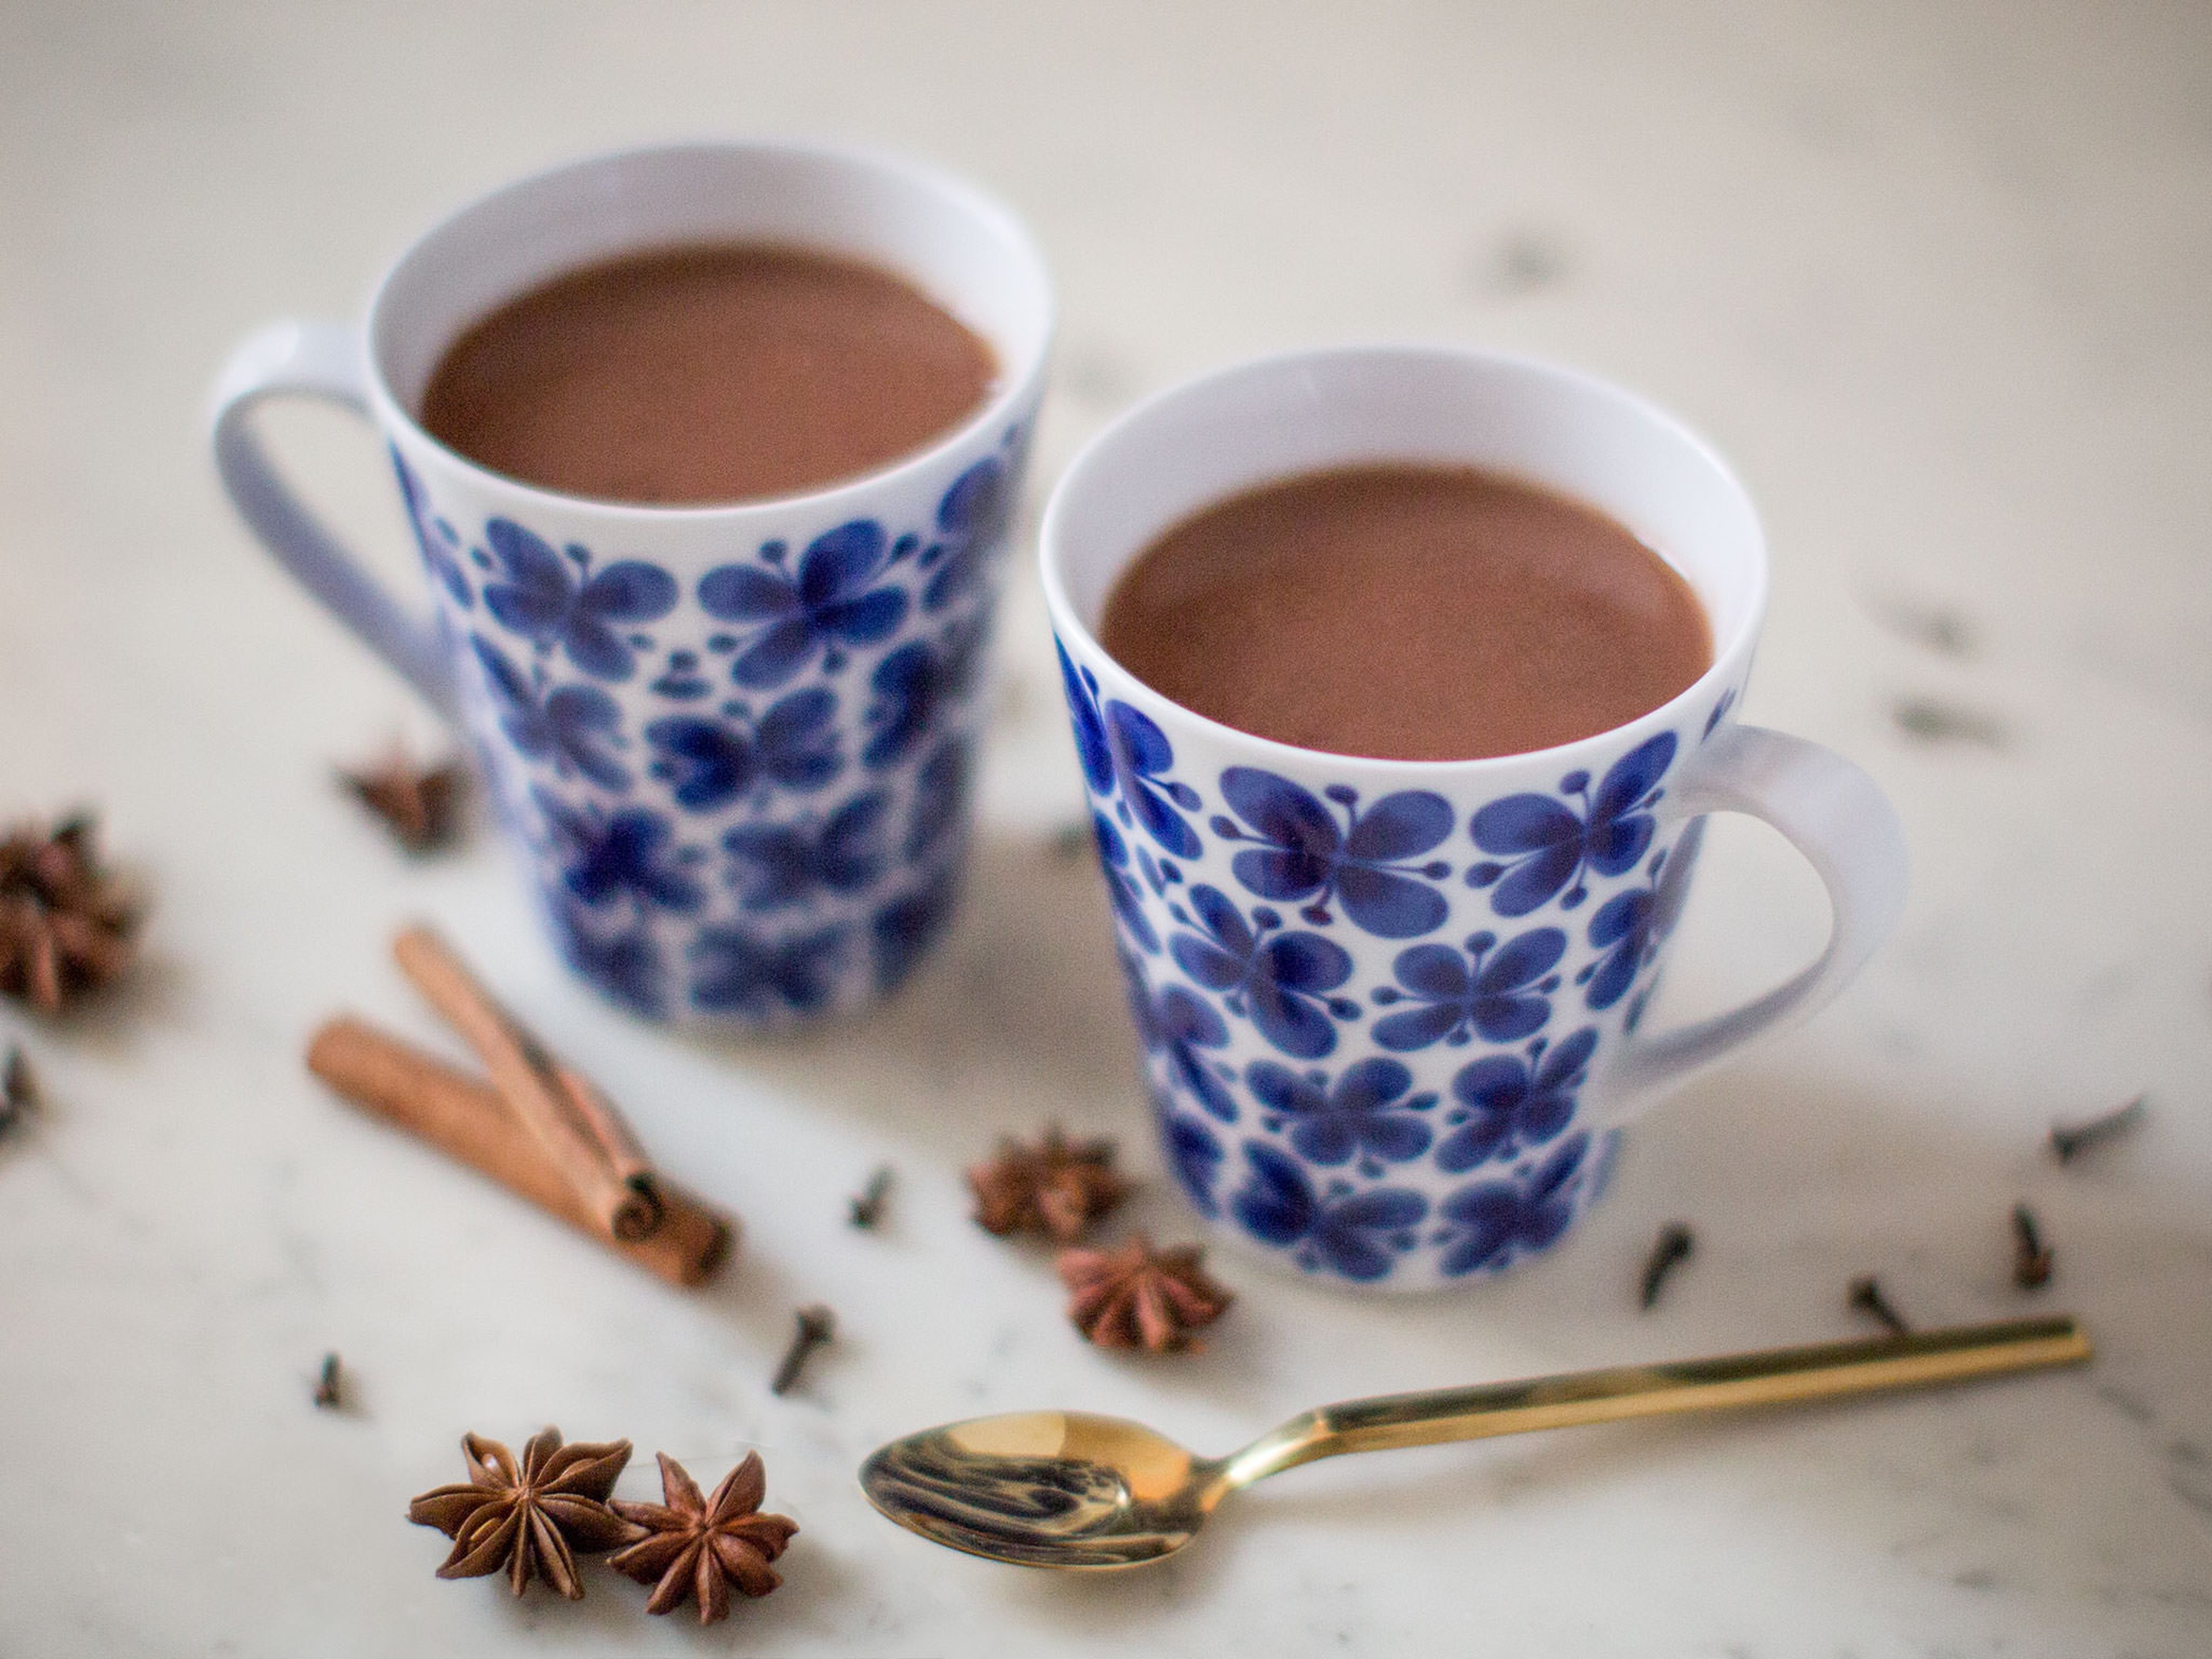 Chai hot chocolate